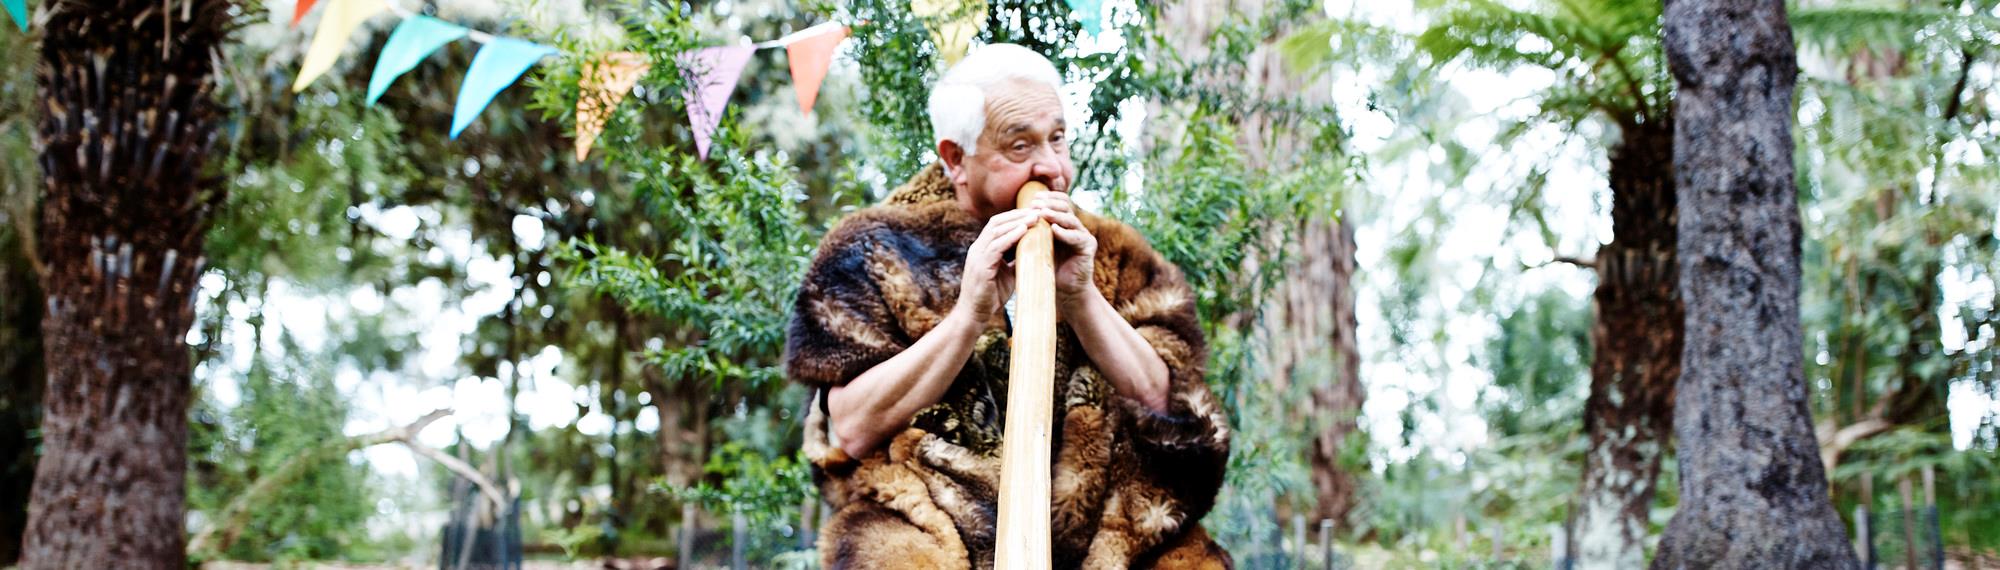 Murrundindi playing the Didgeridoo in the garden at Healesville Sanctuary.